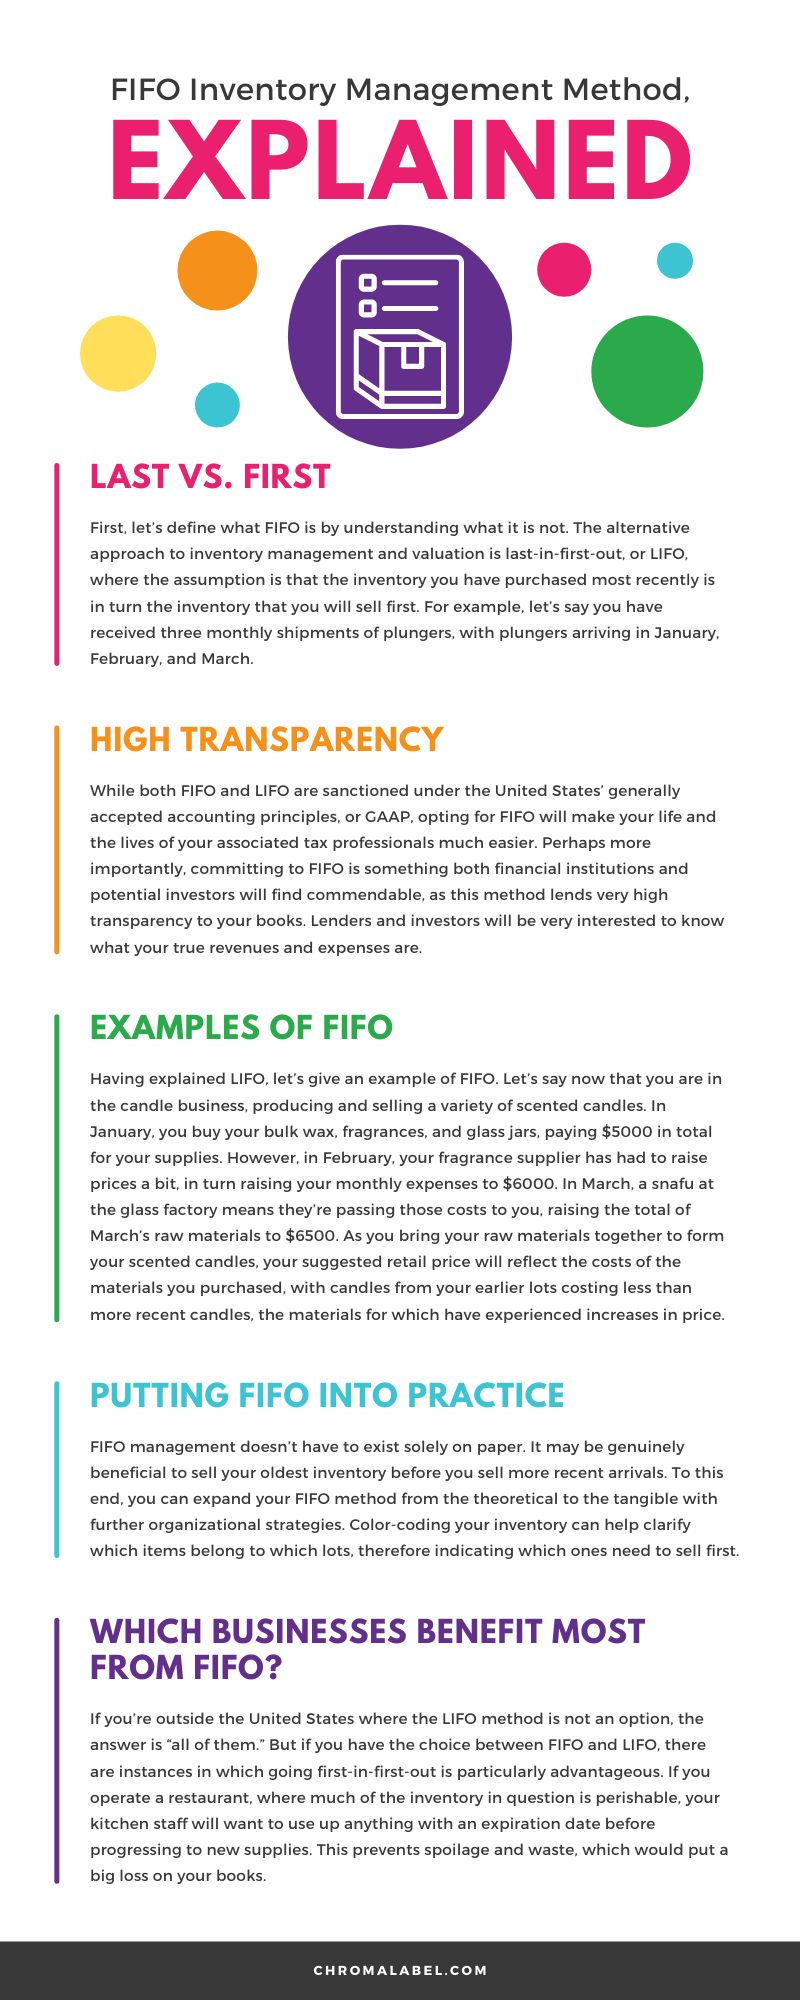 FIFO Inventory Management Method, Explained